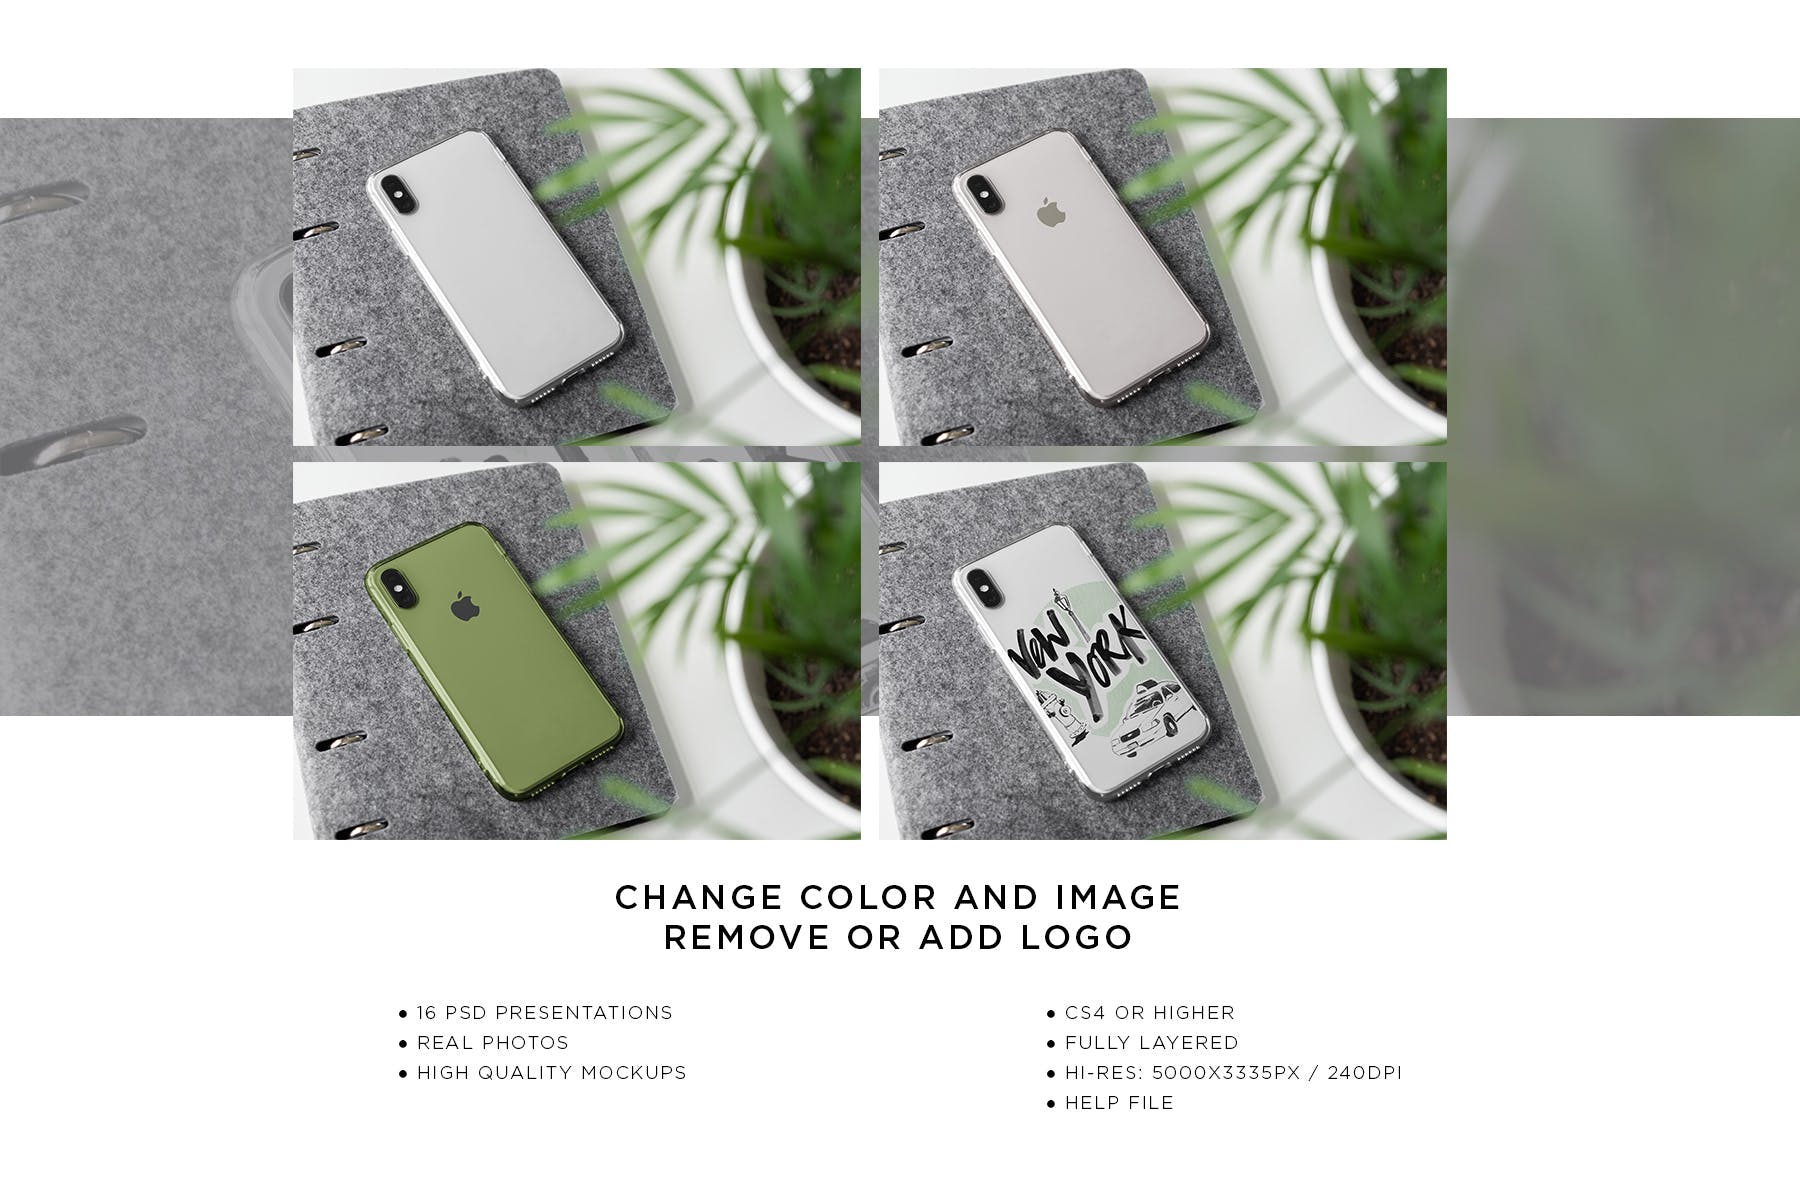 iPhone Xs透明手机壳外观设计效果图样机v2 iPhone Xs Clear Case Mock-Up vol.2插图(13)